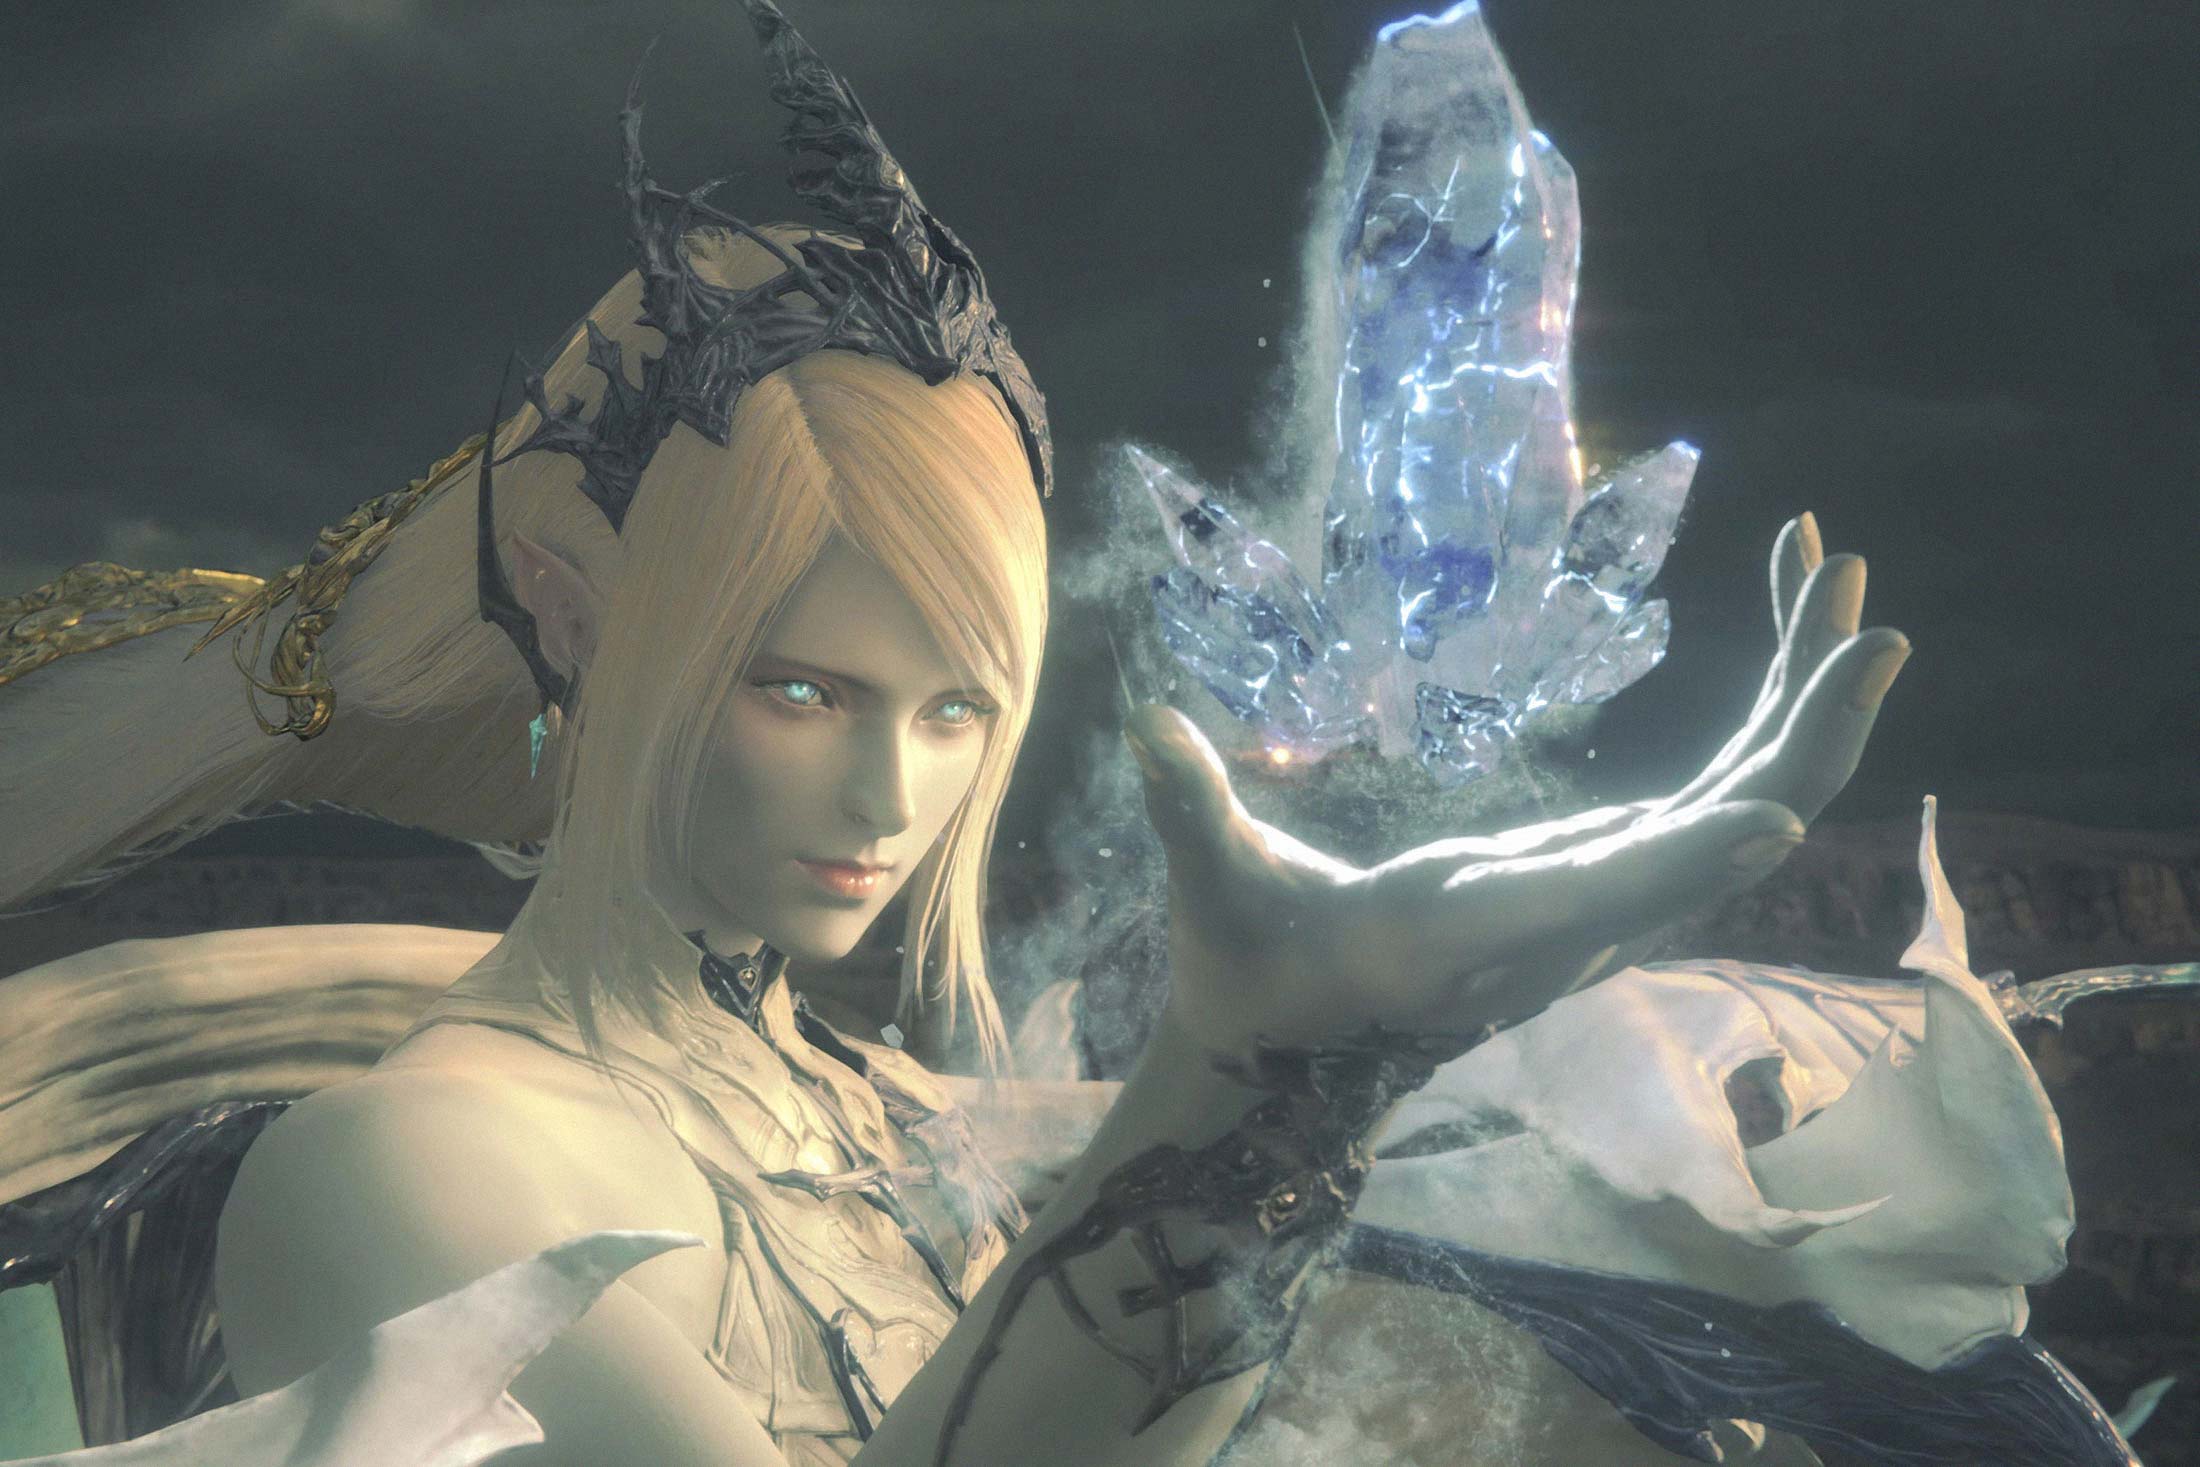 Final Fantasy 16 - World Premiere Trailer